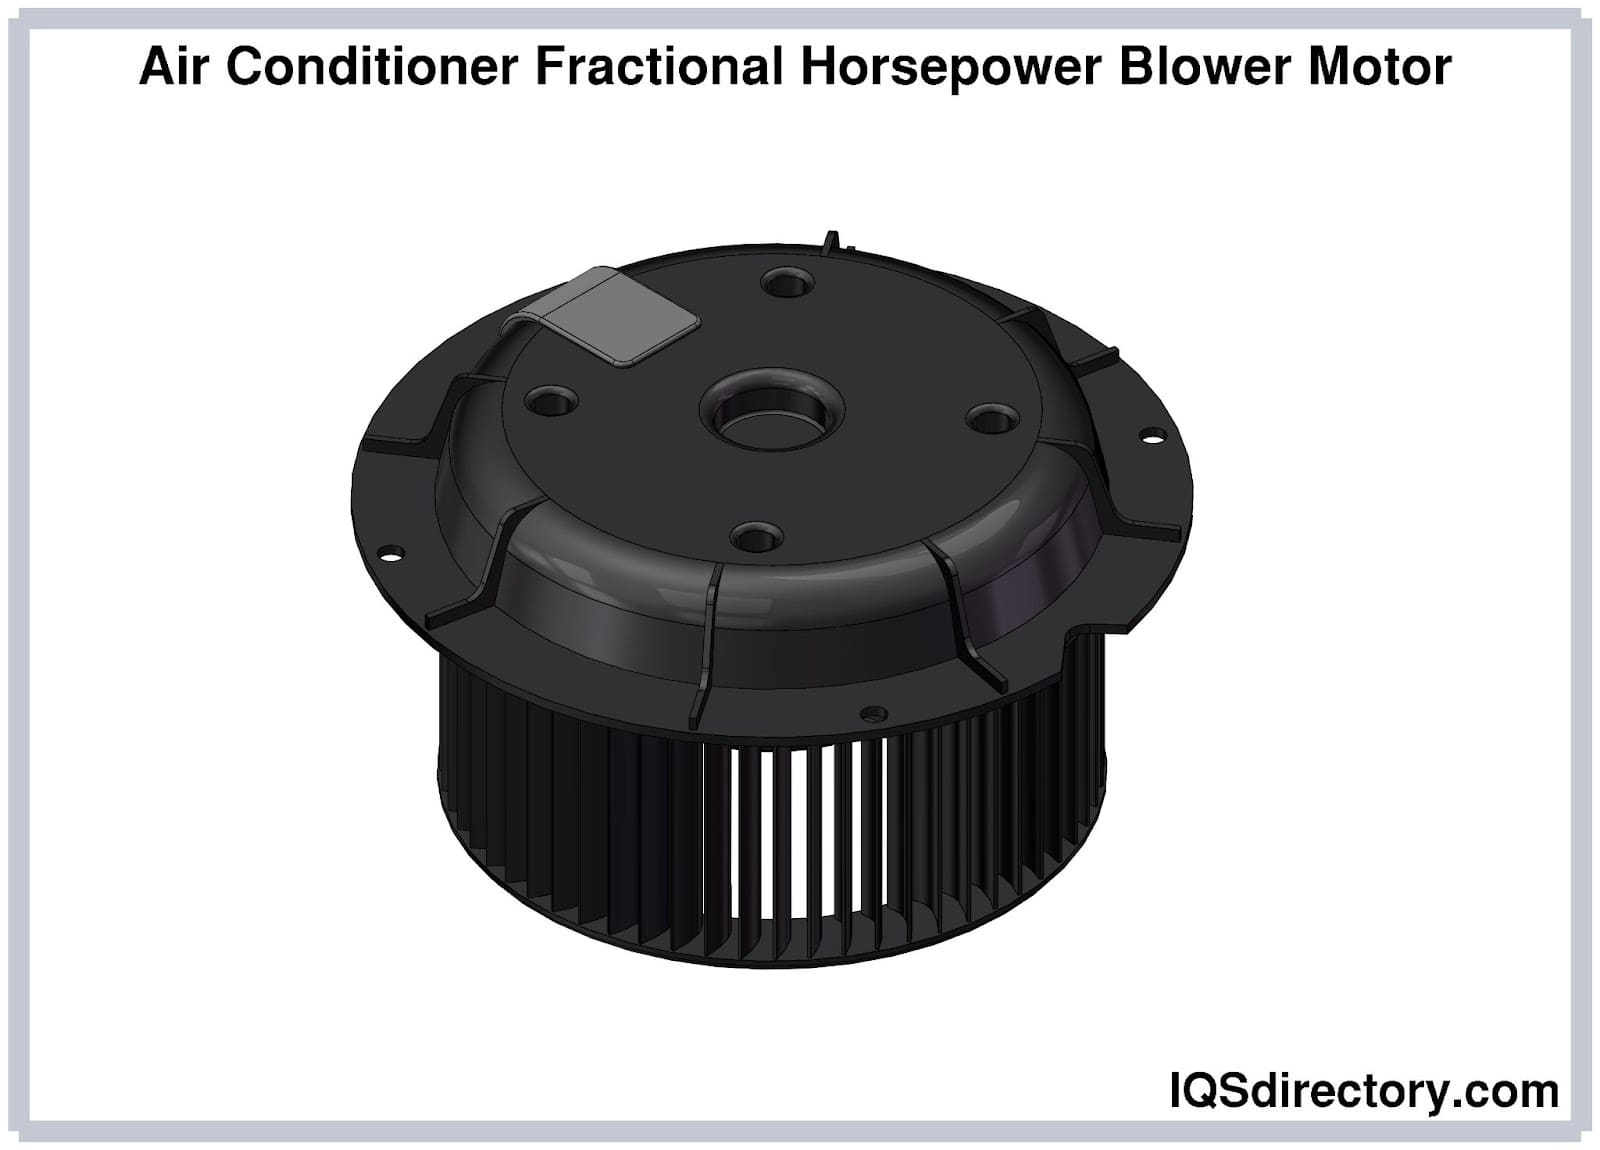 Air Conditioner Fractional Horsepower Blower Motor